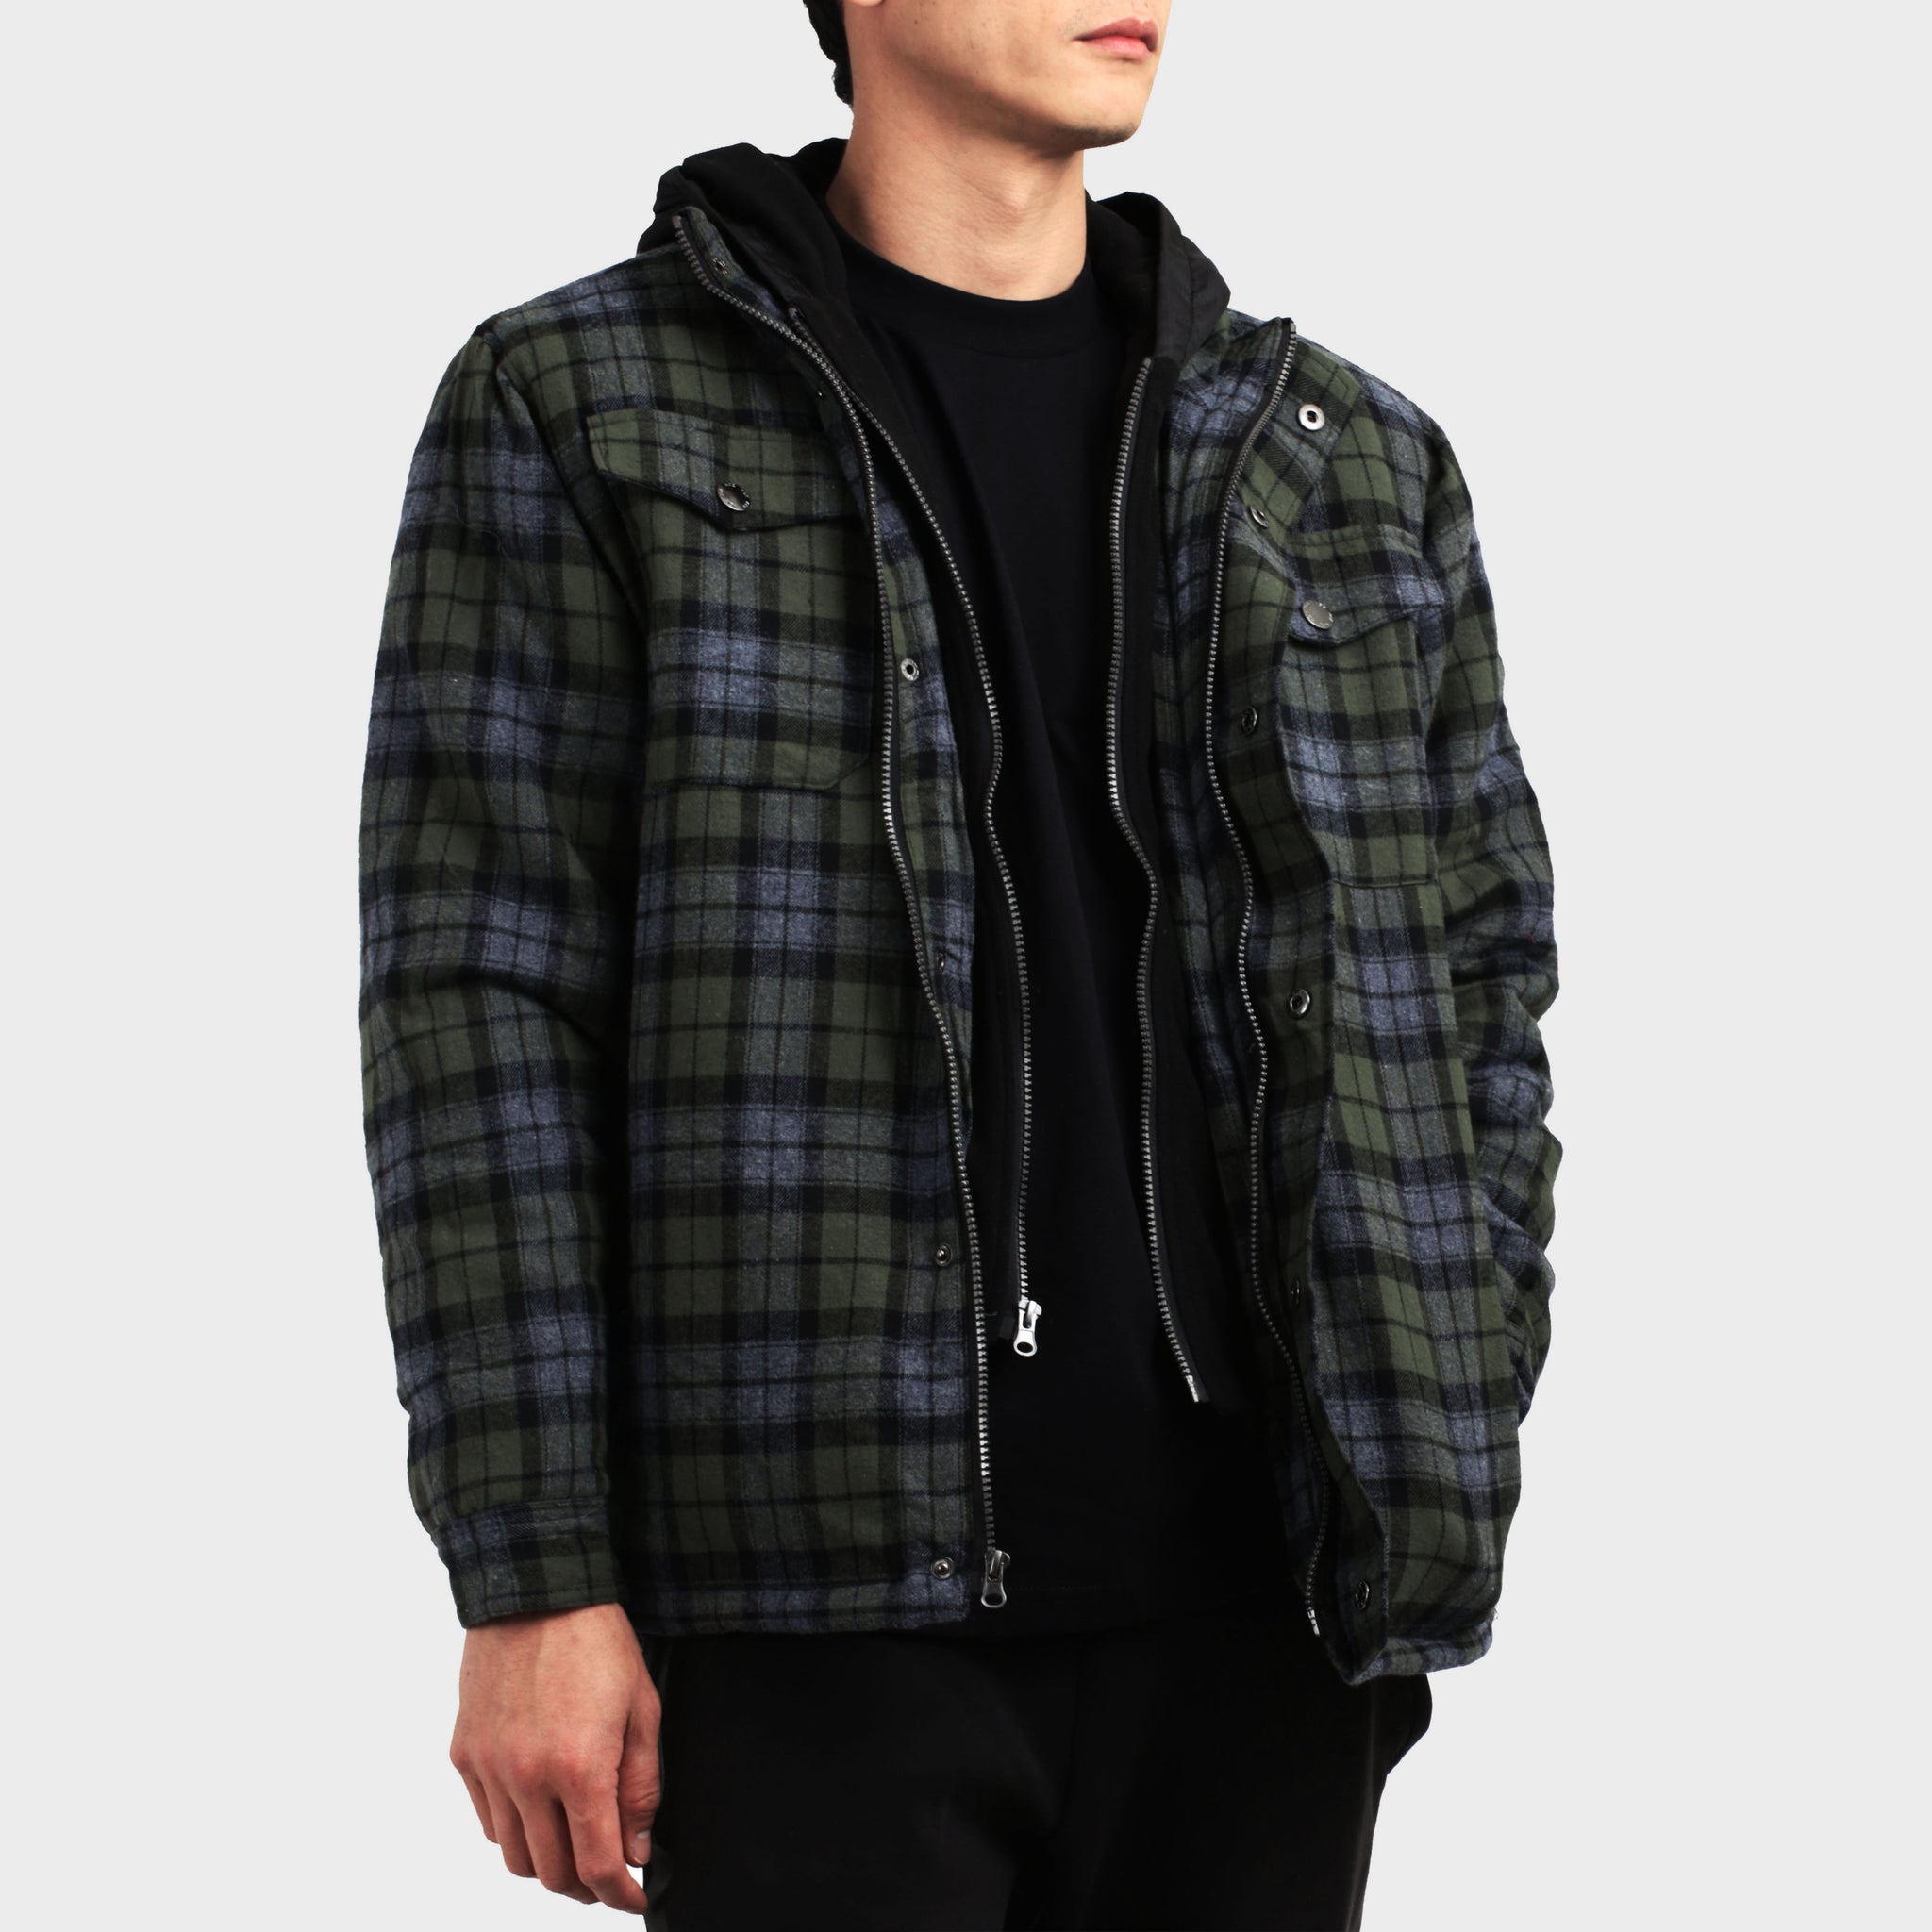 flannel jacket_flannel shirt jacket_sherpa lined flannel_flannel jacket with hood_mens flannel jacket_quilted flannel jacket_flannel lined jacket_Dark Olive